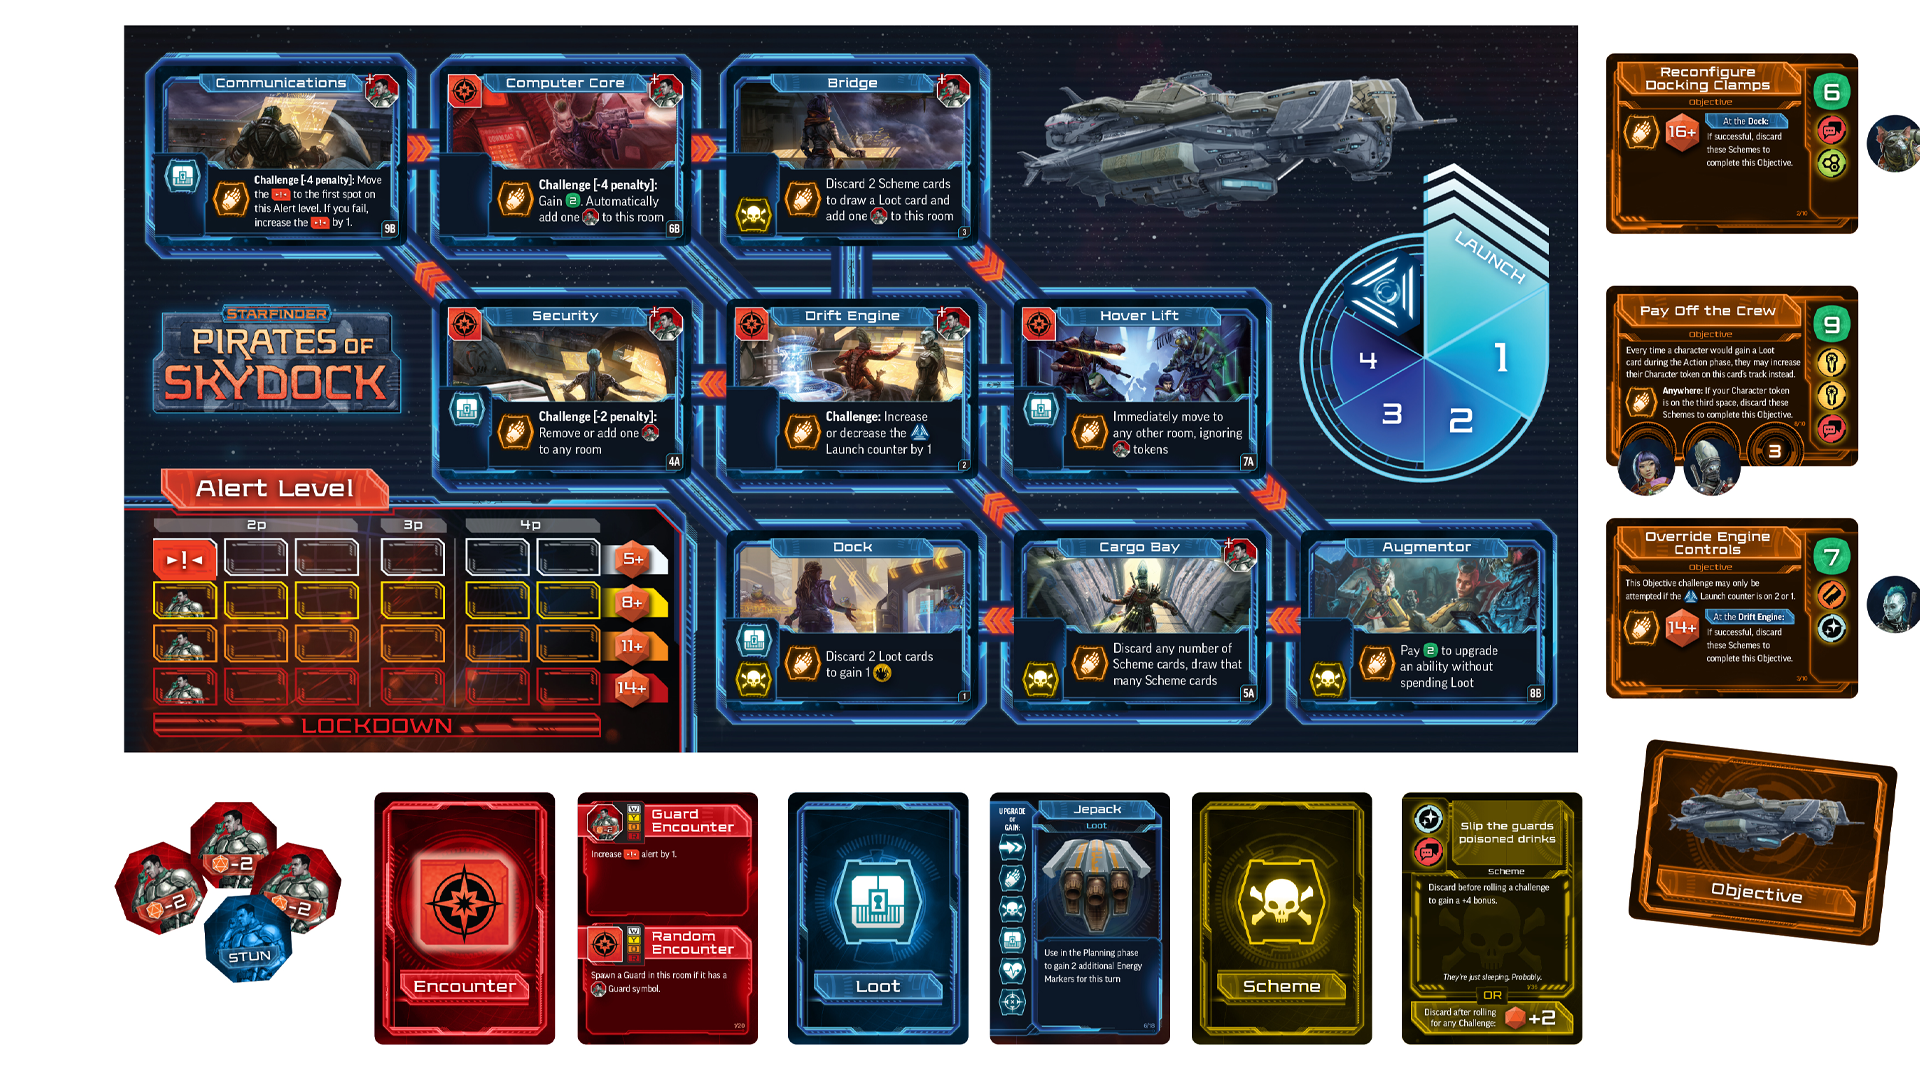 Starfinder: Pirates of Skydock layout image